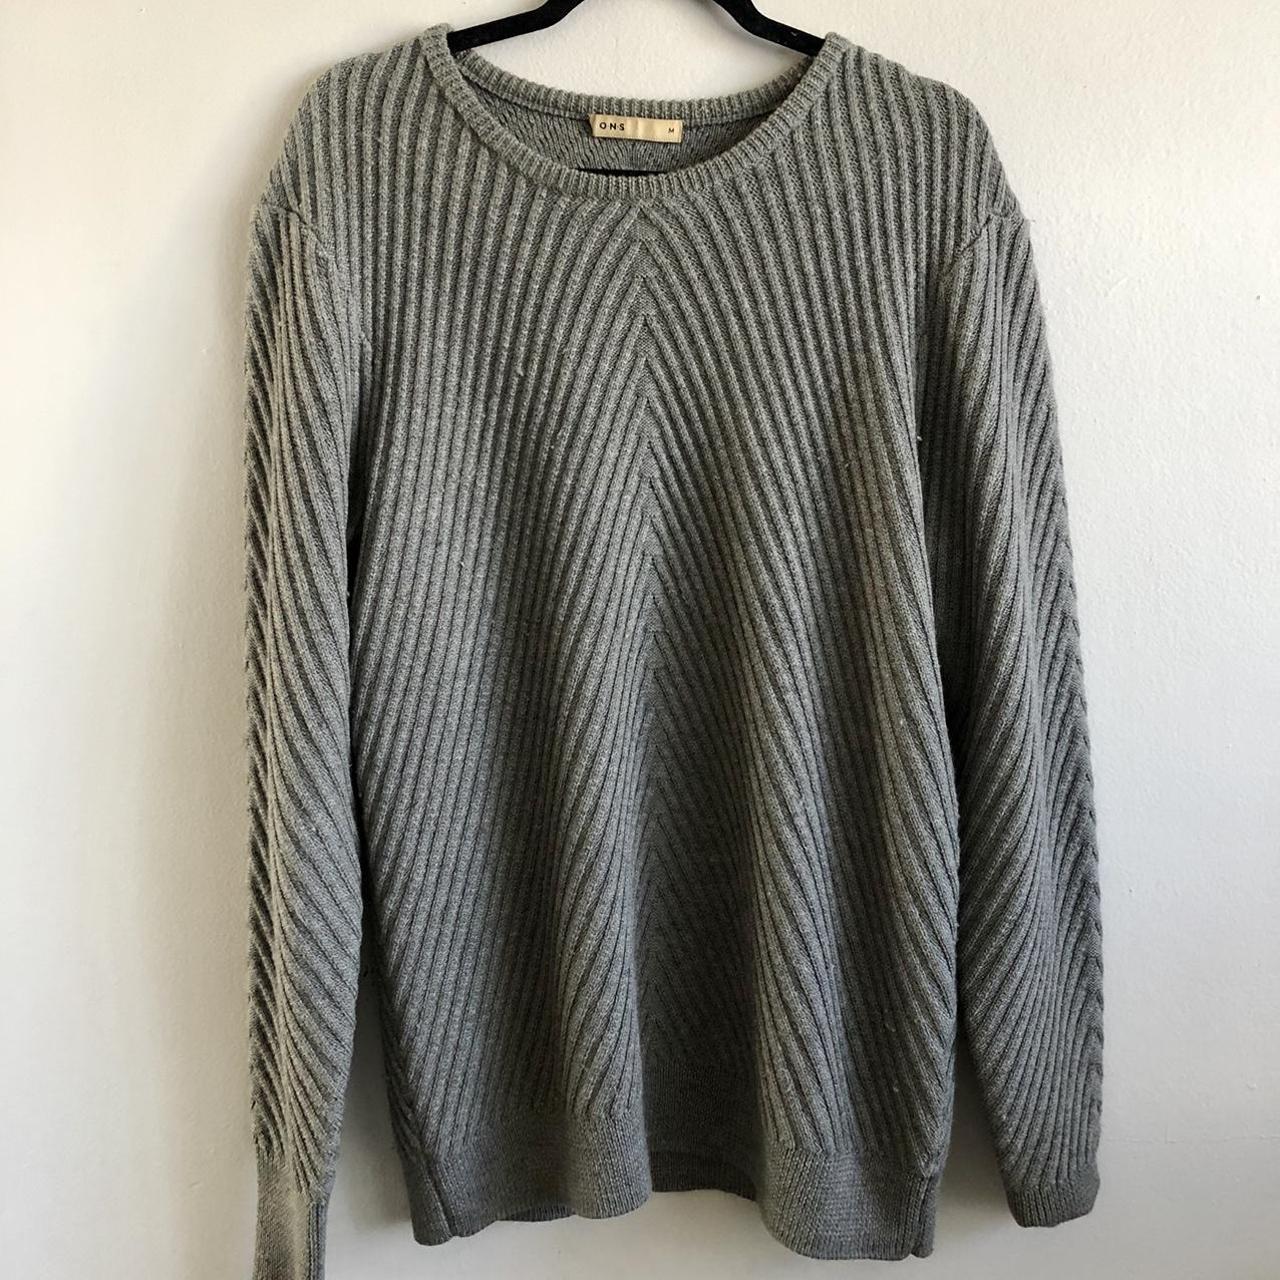 Men’s grey textured sweater by ONS - Depop